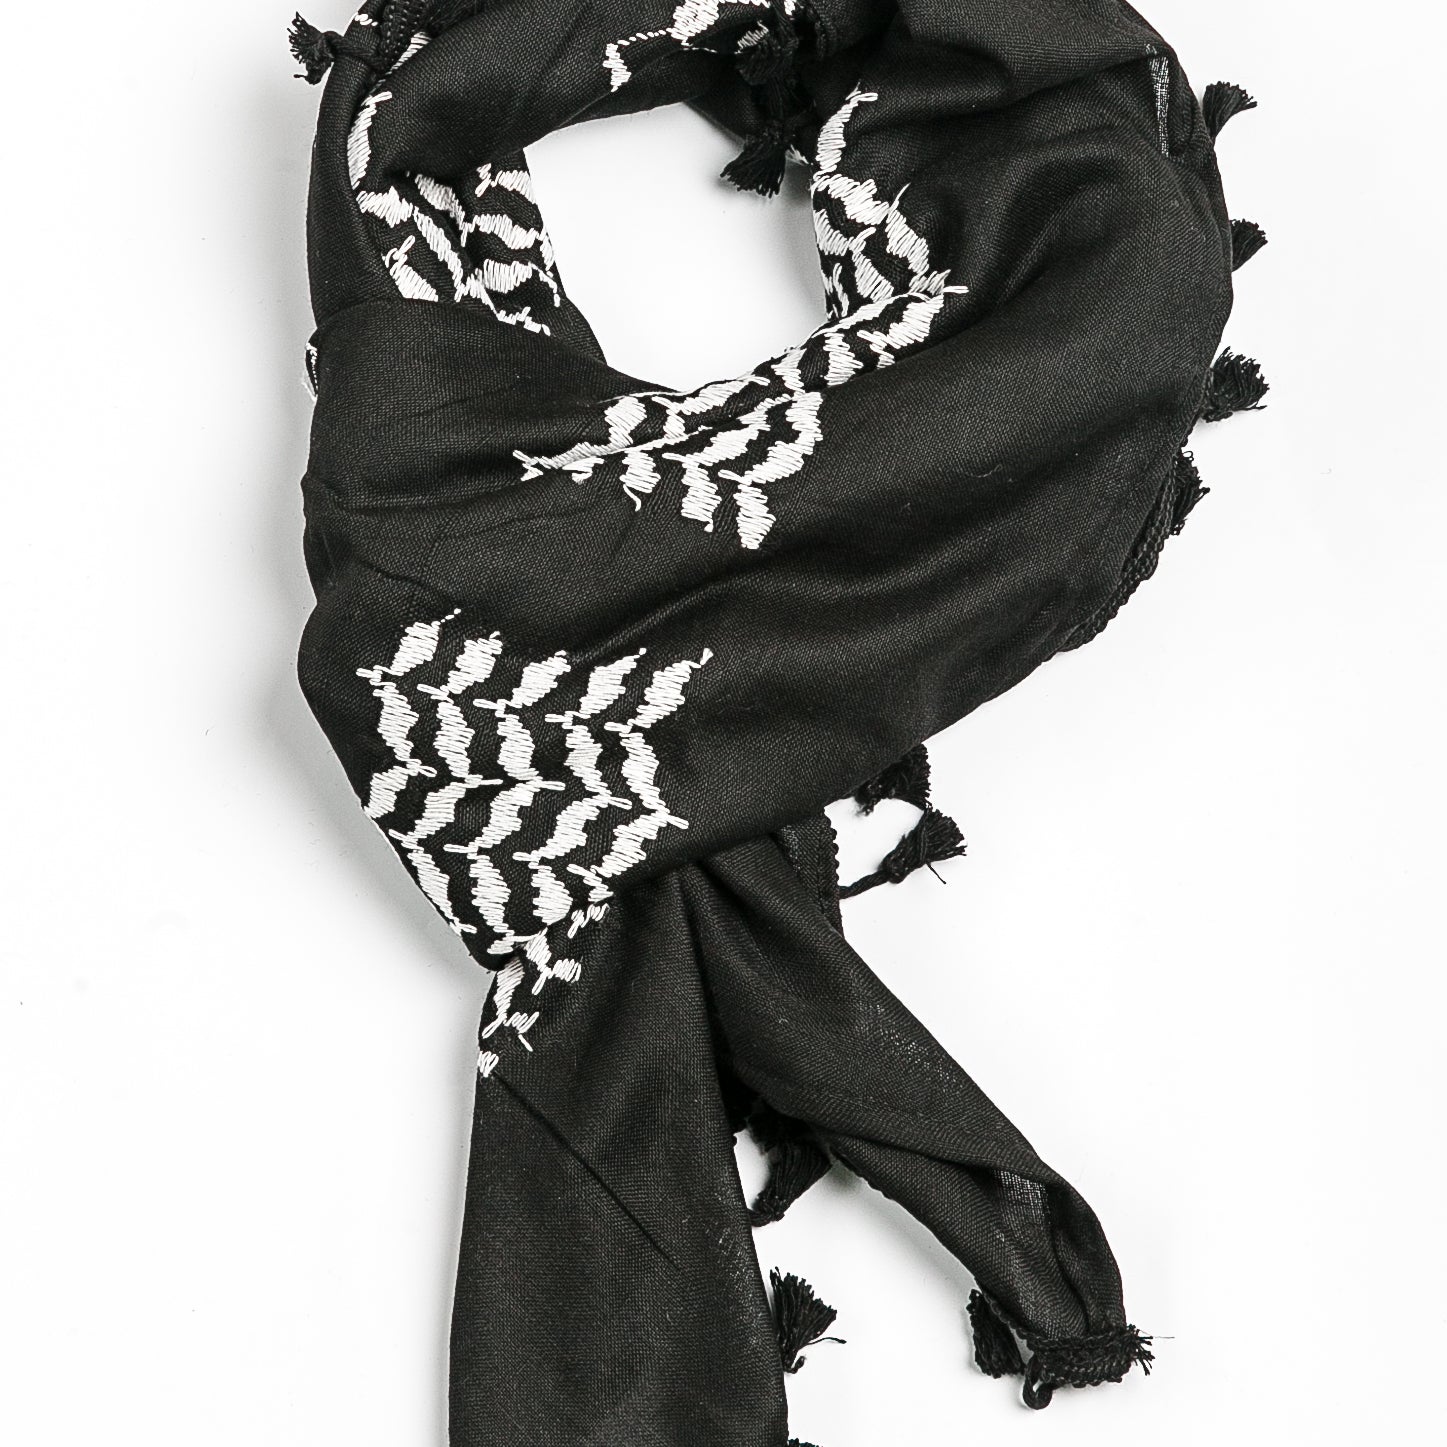 Black and white Hirbawi keffiyeh inverted